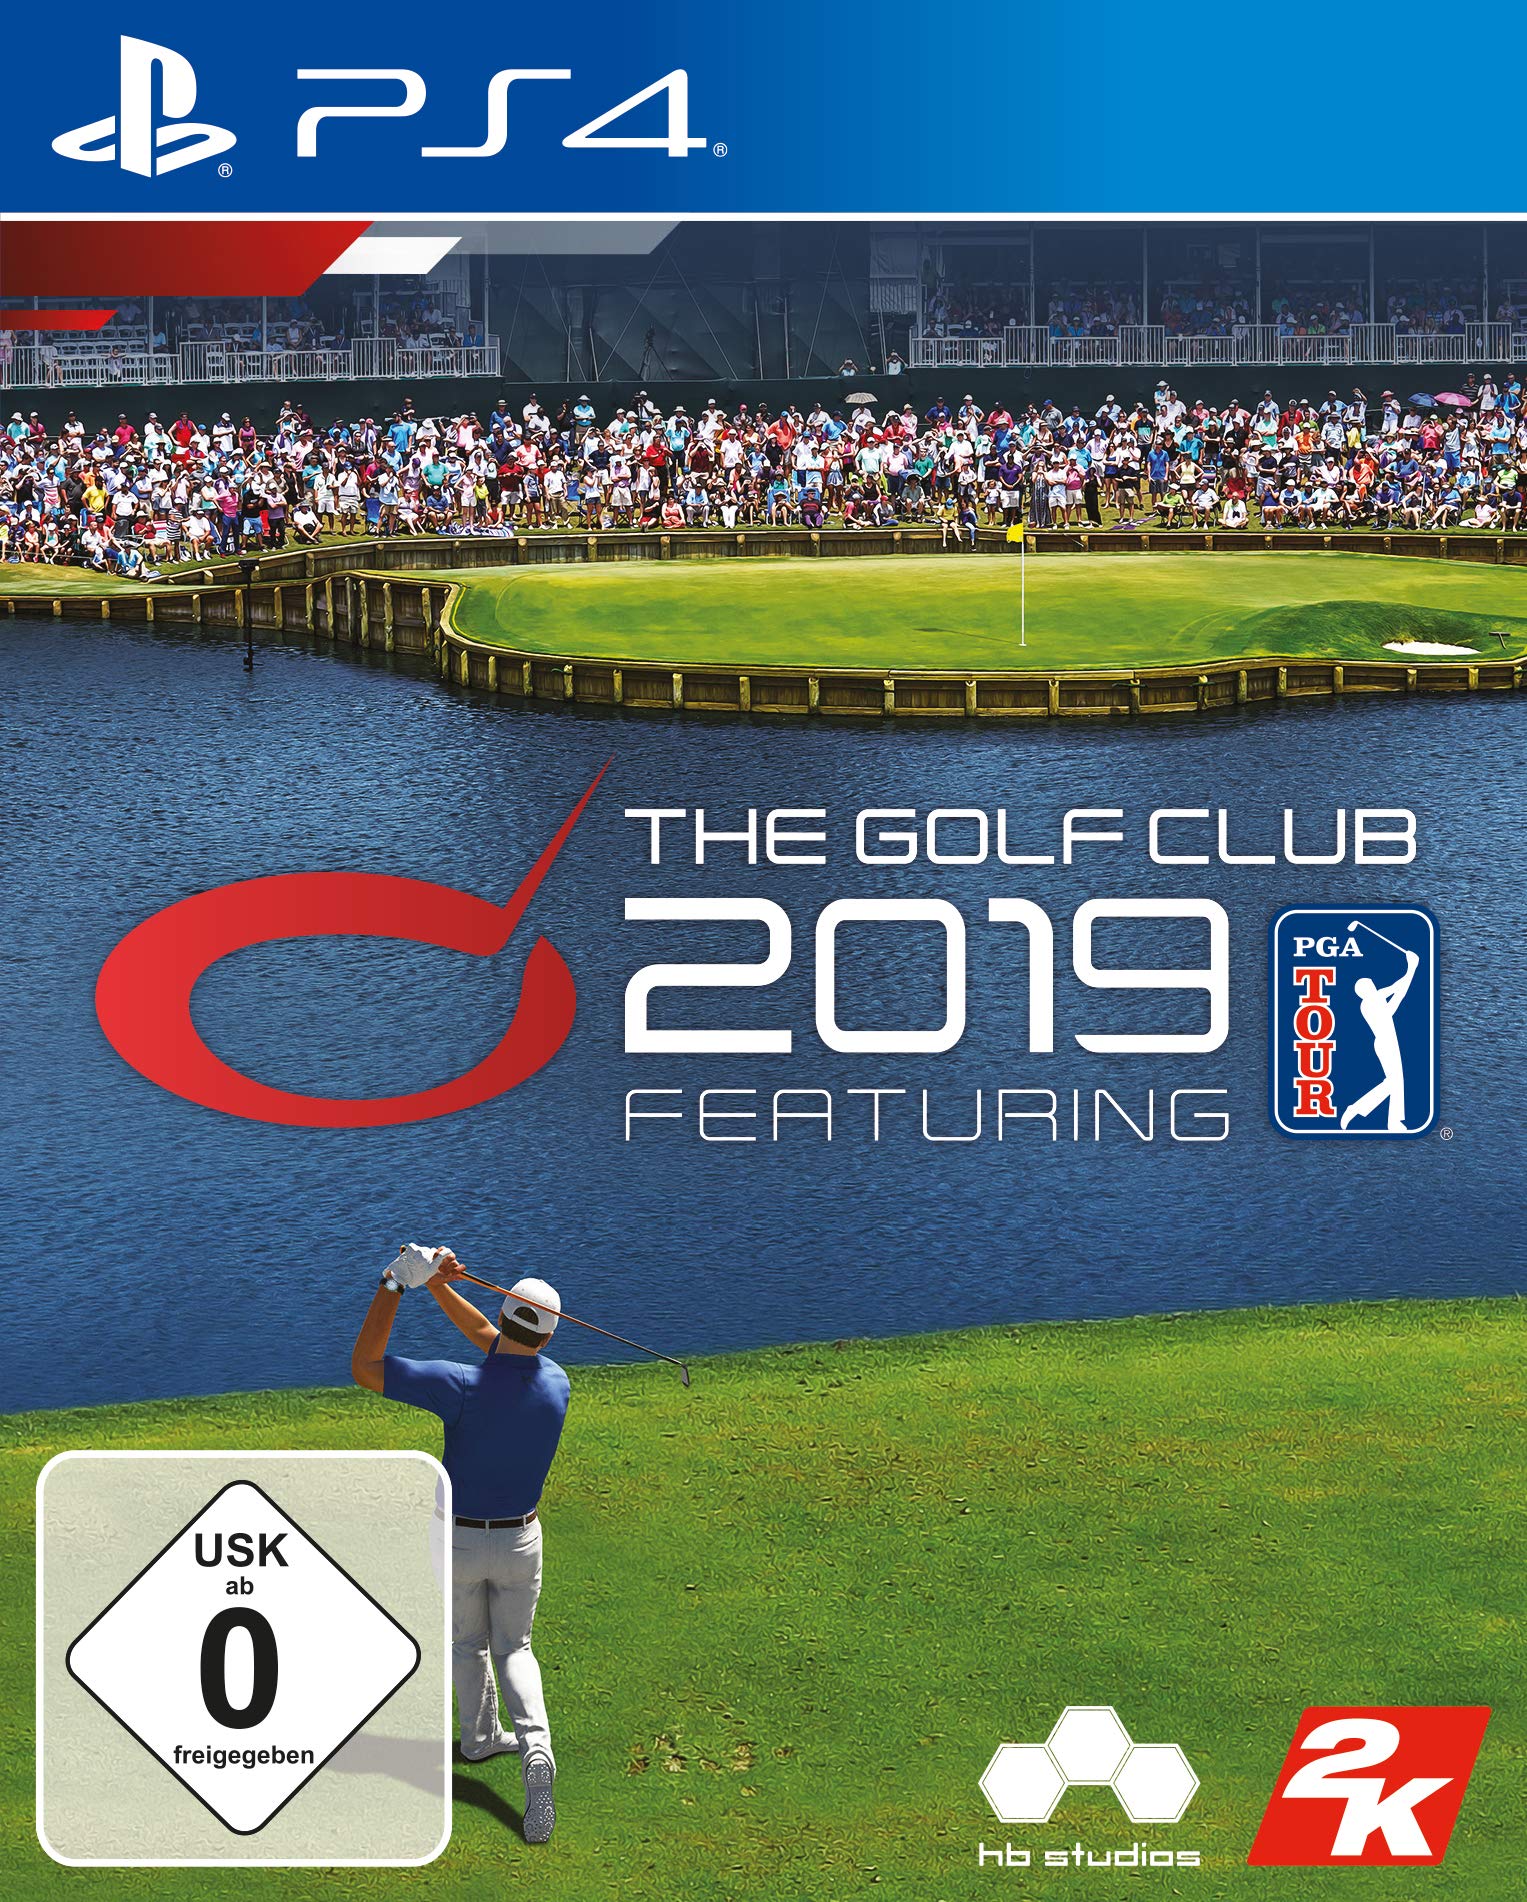 The-Golf-Club-2019-featuring-PGA-TOUR